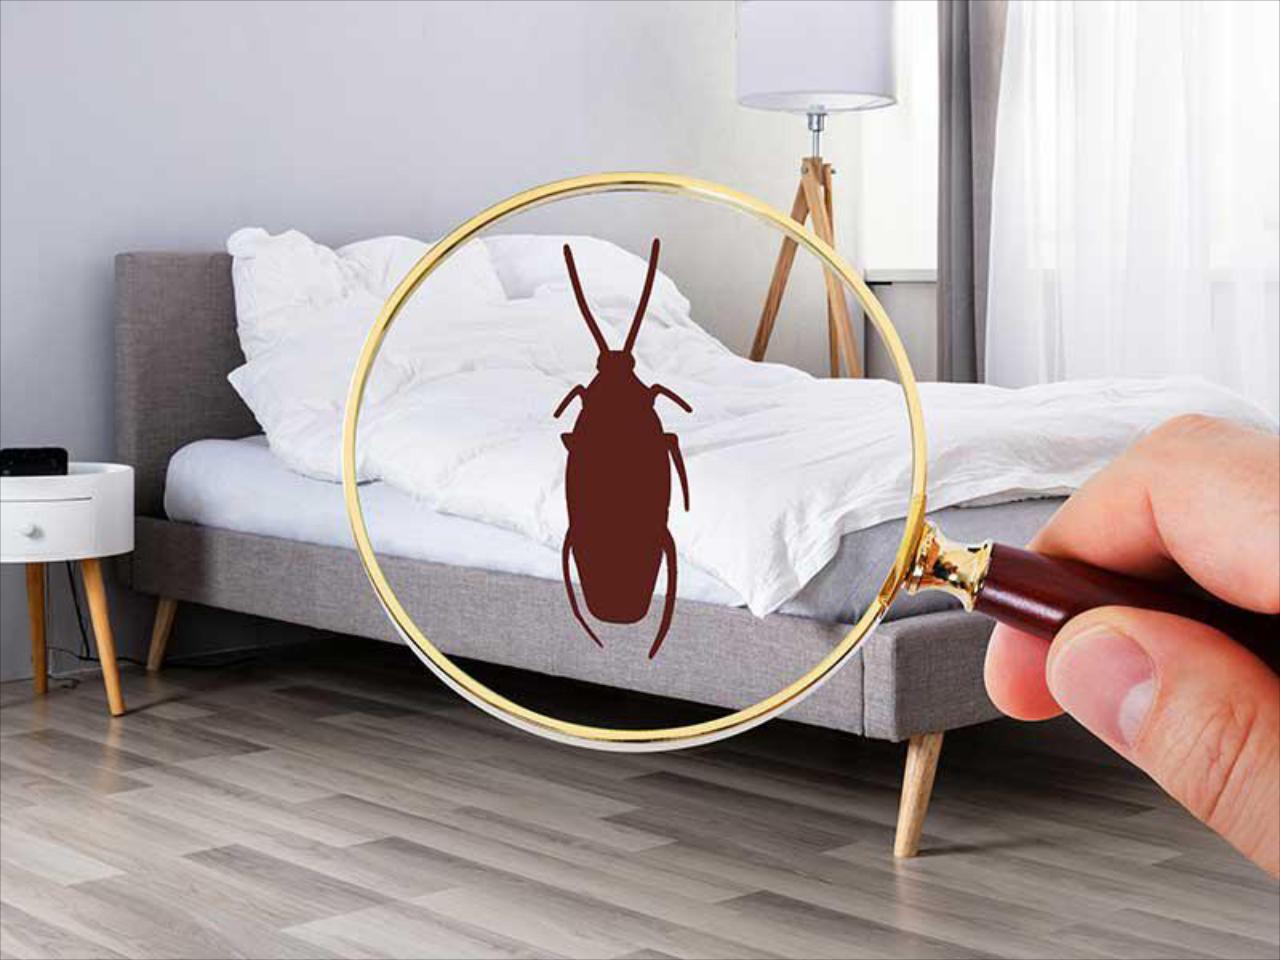 Do you provide bed bug extermination services?